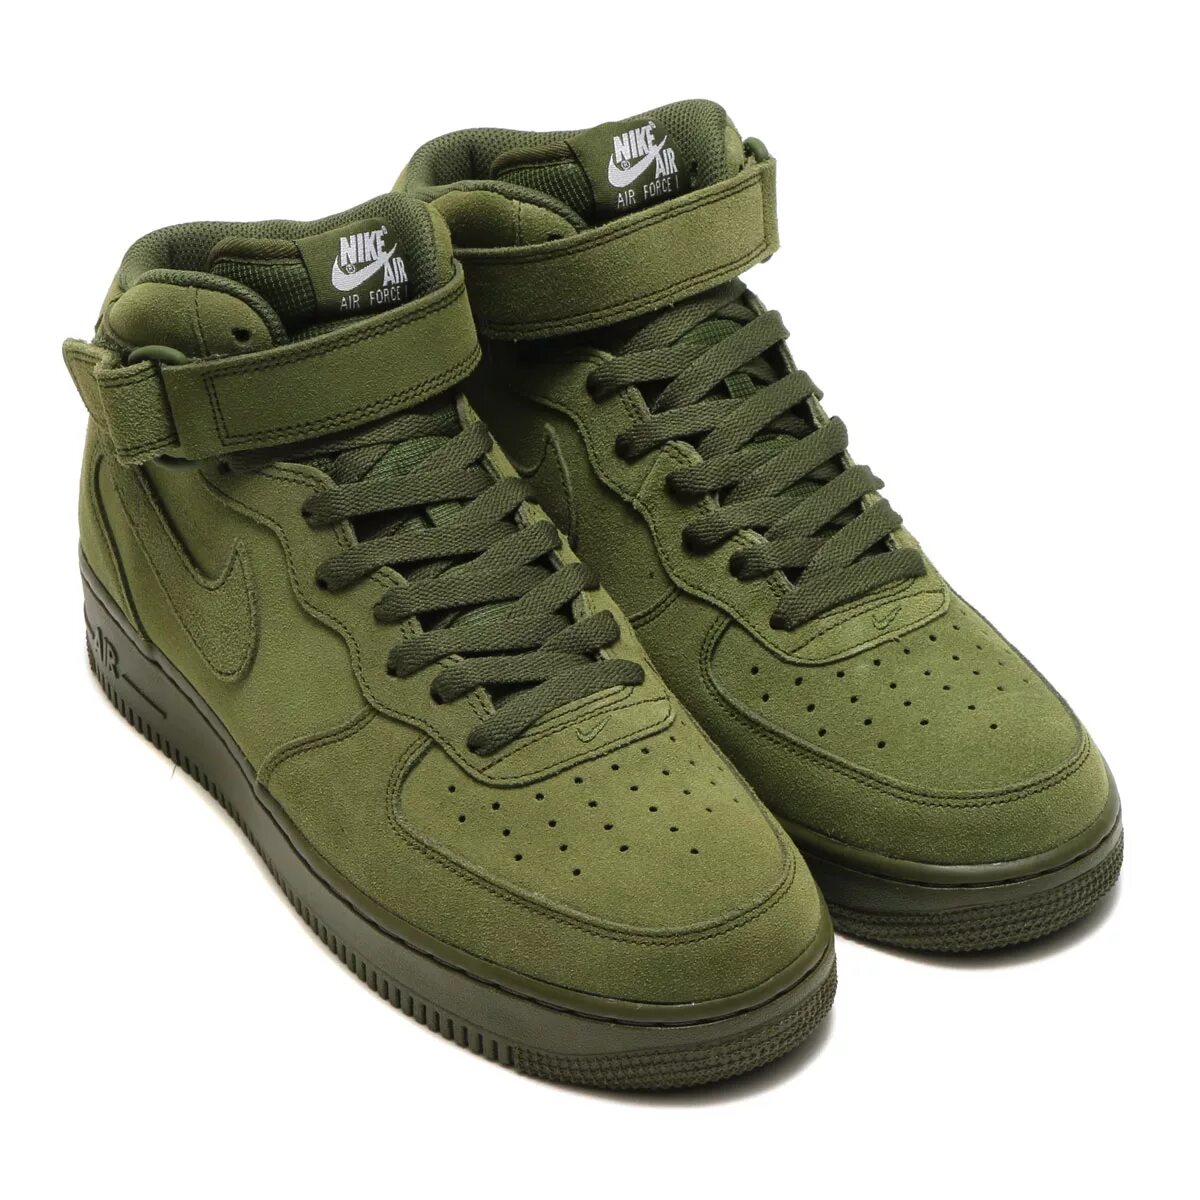 Найк форсы 1 зеленые. Nike Air Force 1 болотные. Nike Air Force 1 Mid Green. Найк АИР Форс зеленые. Зеленые кроссовки какие